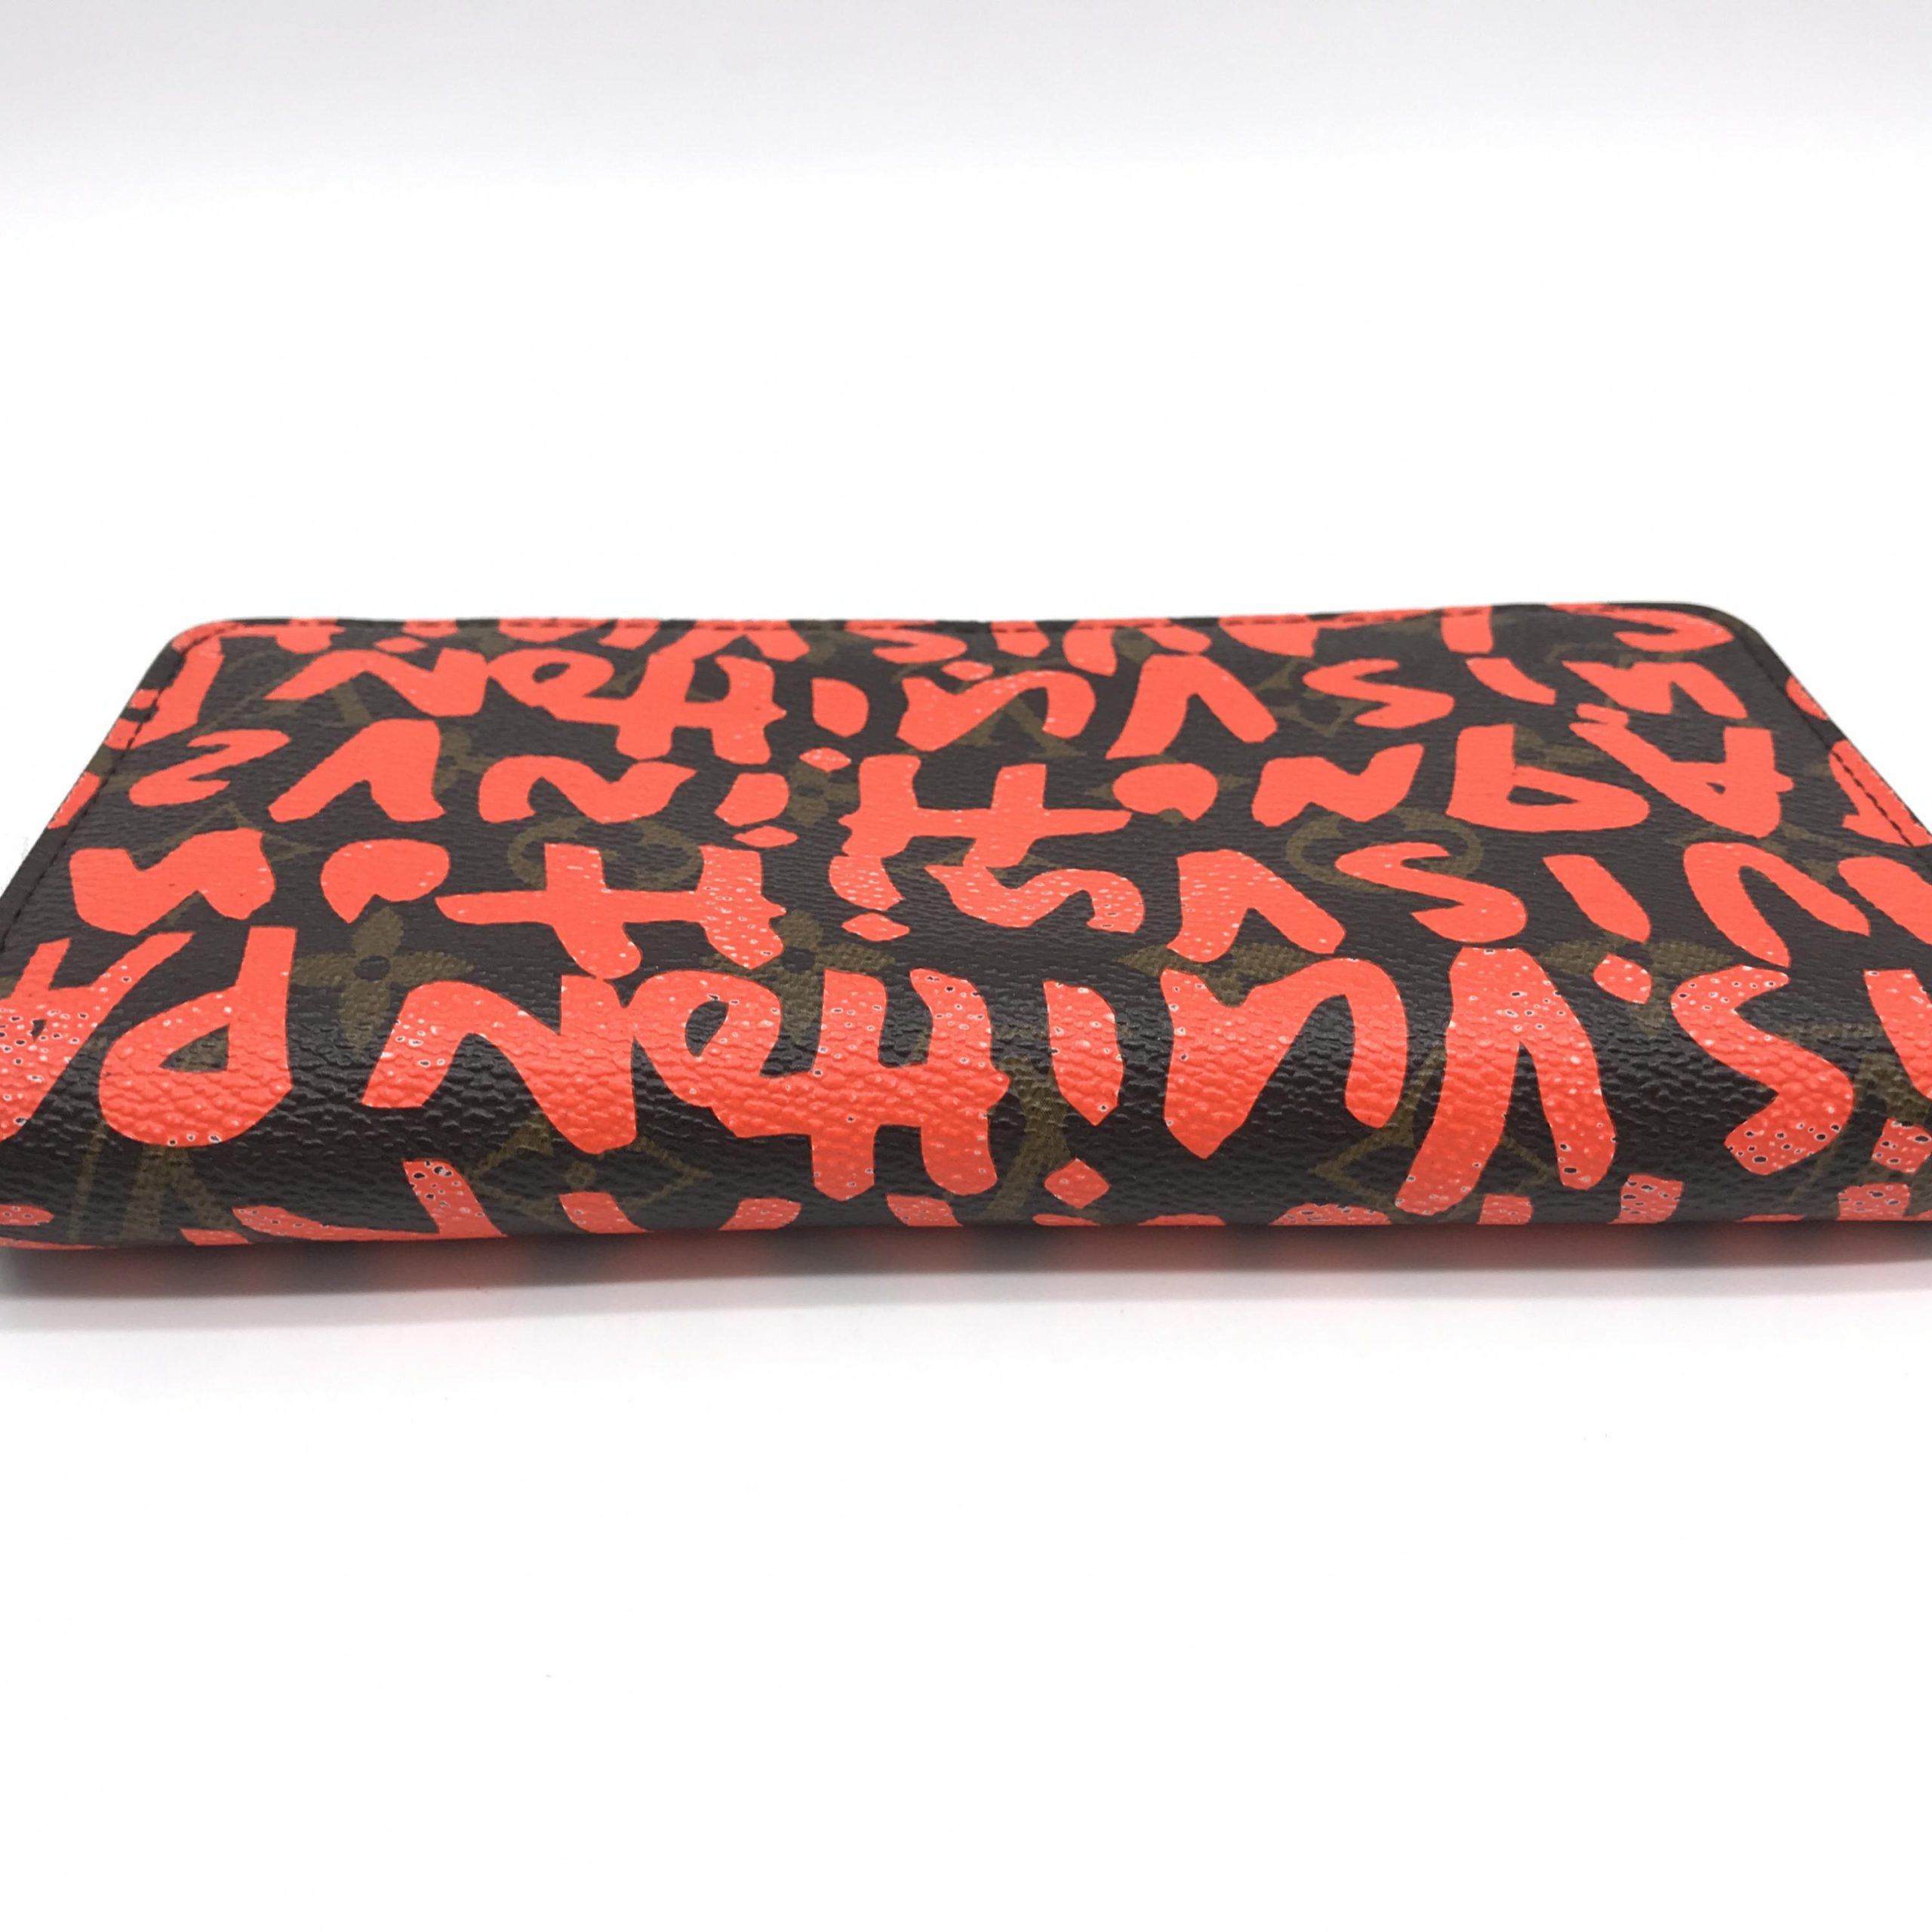 Louis Vuitton Steven Sprouse Orange Graffiti Zippy Wallet - A